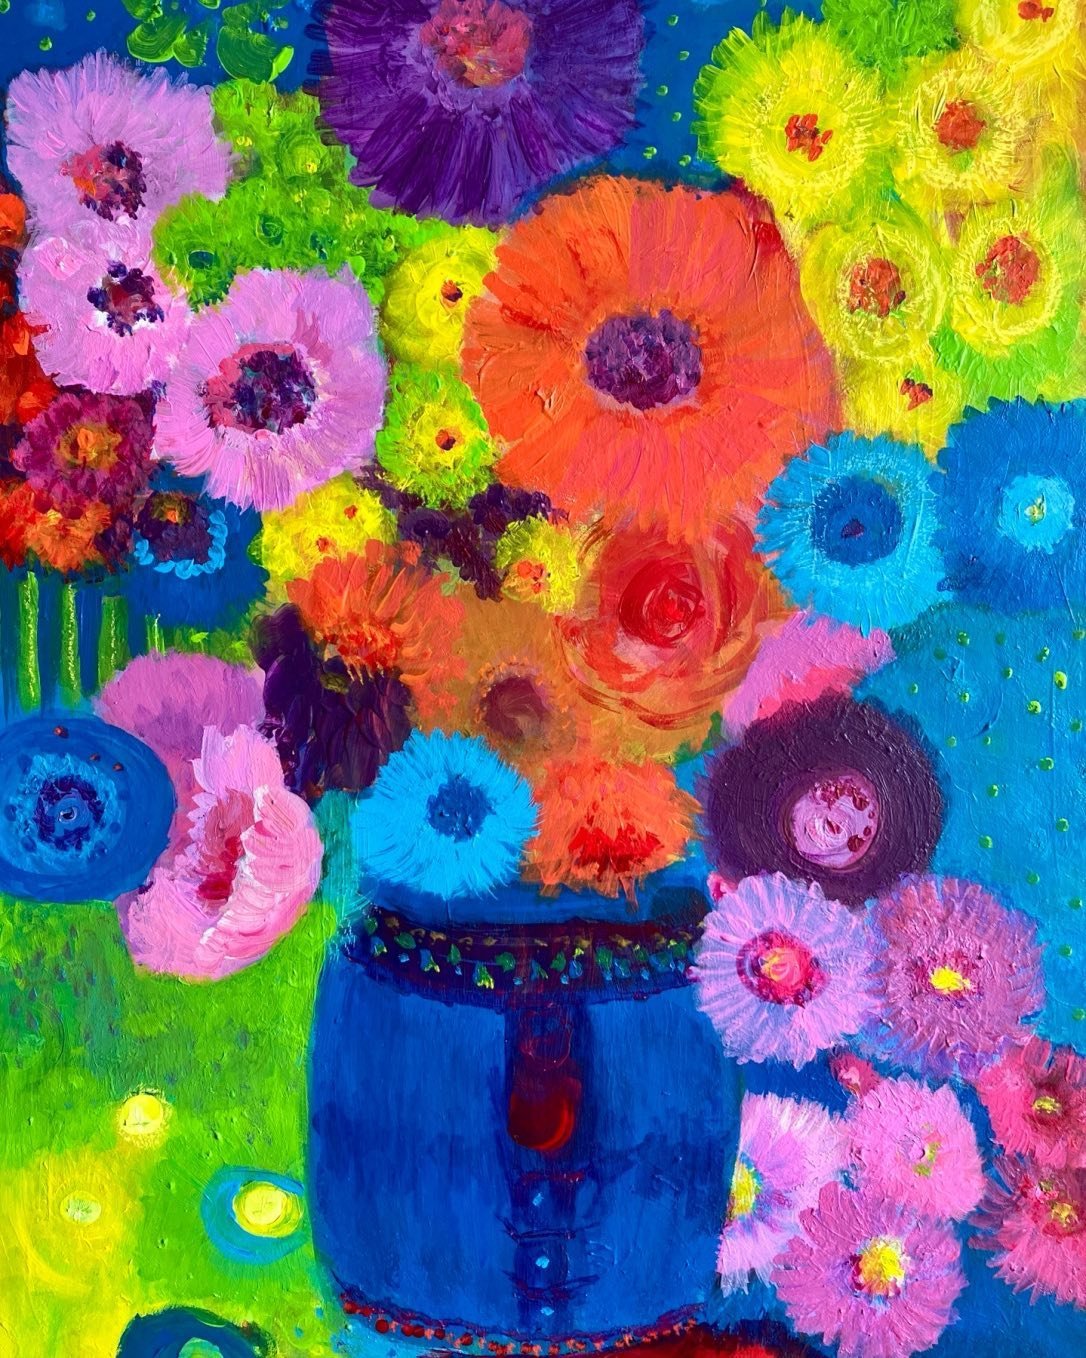 &ldquo;There&rsquo;s always joy&rdquo; 12x16 inches birch wood panel. #joyfulflowers#colourfulacrylics#intuitiveacrylics#colourfulflowers